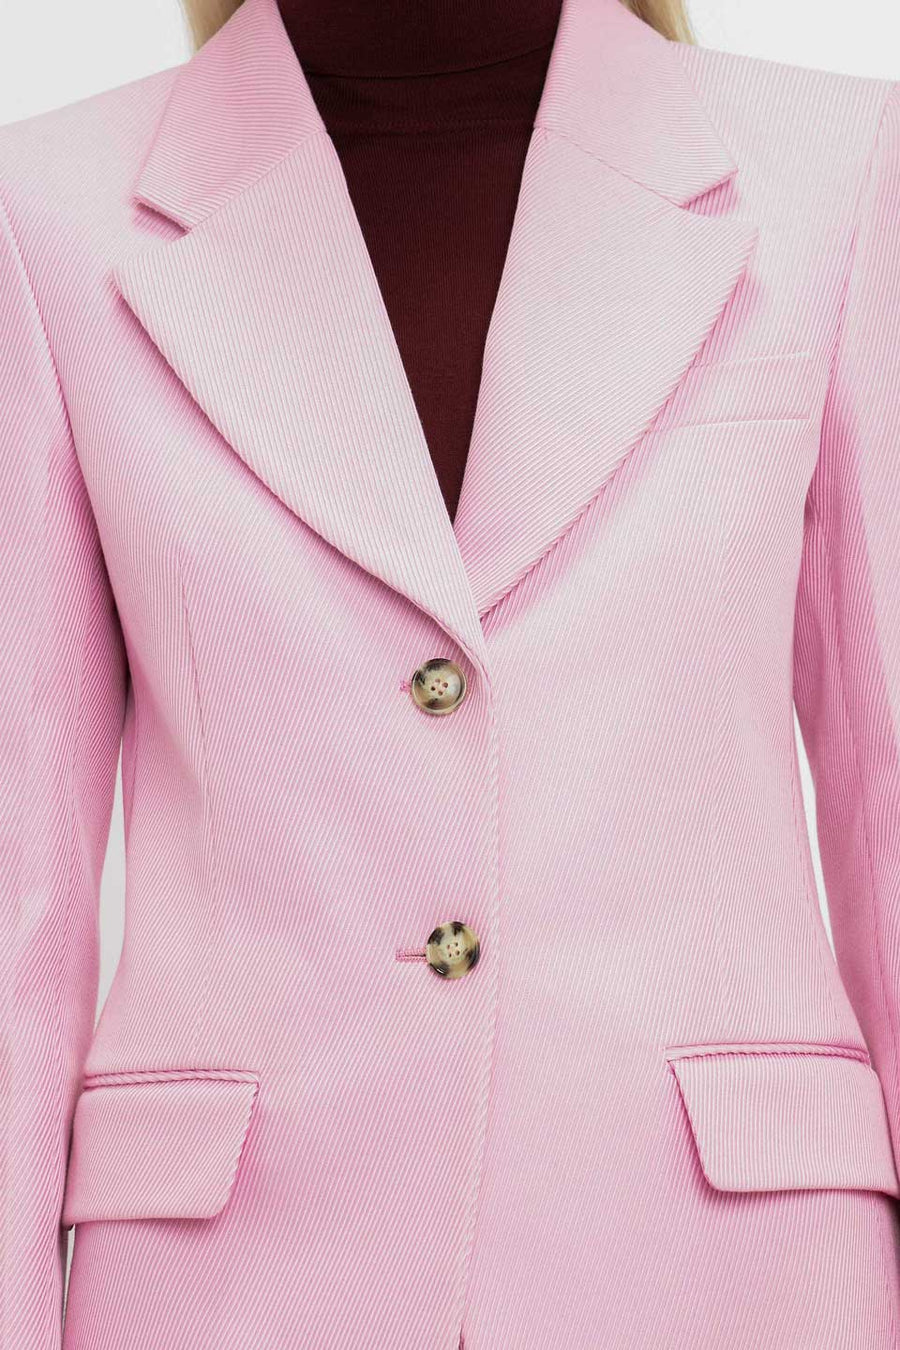 victoria beckham high single button jacket pink figure front detail